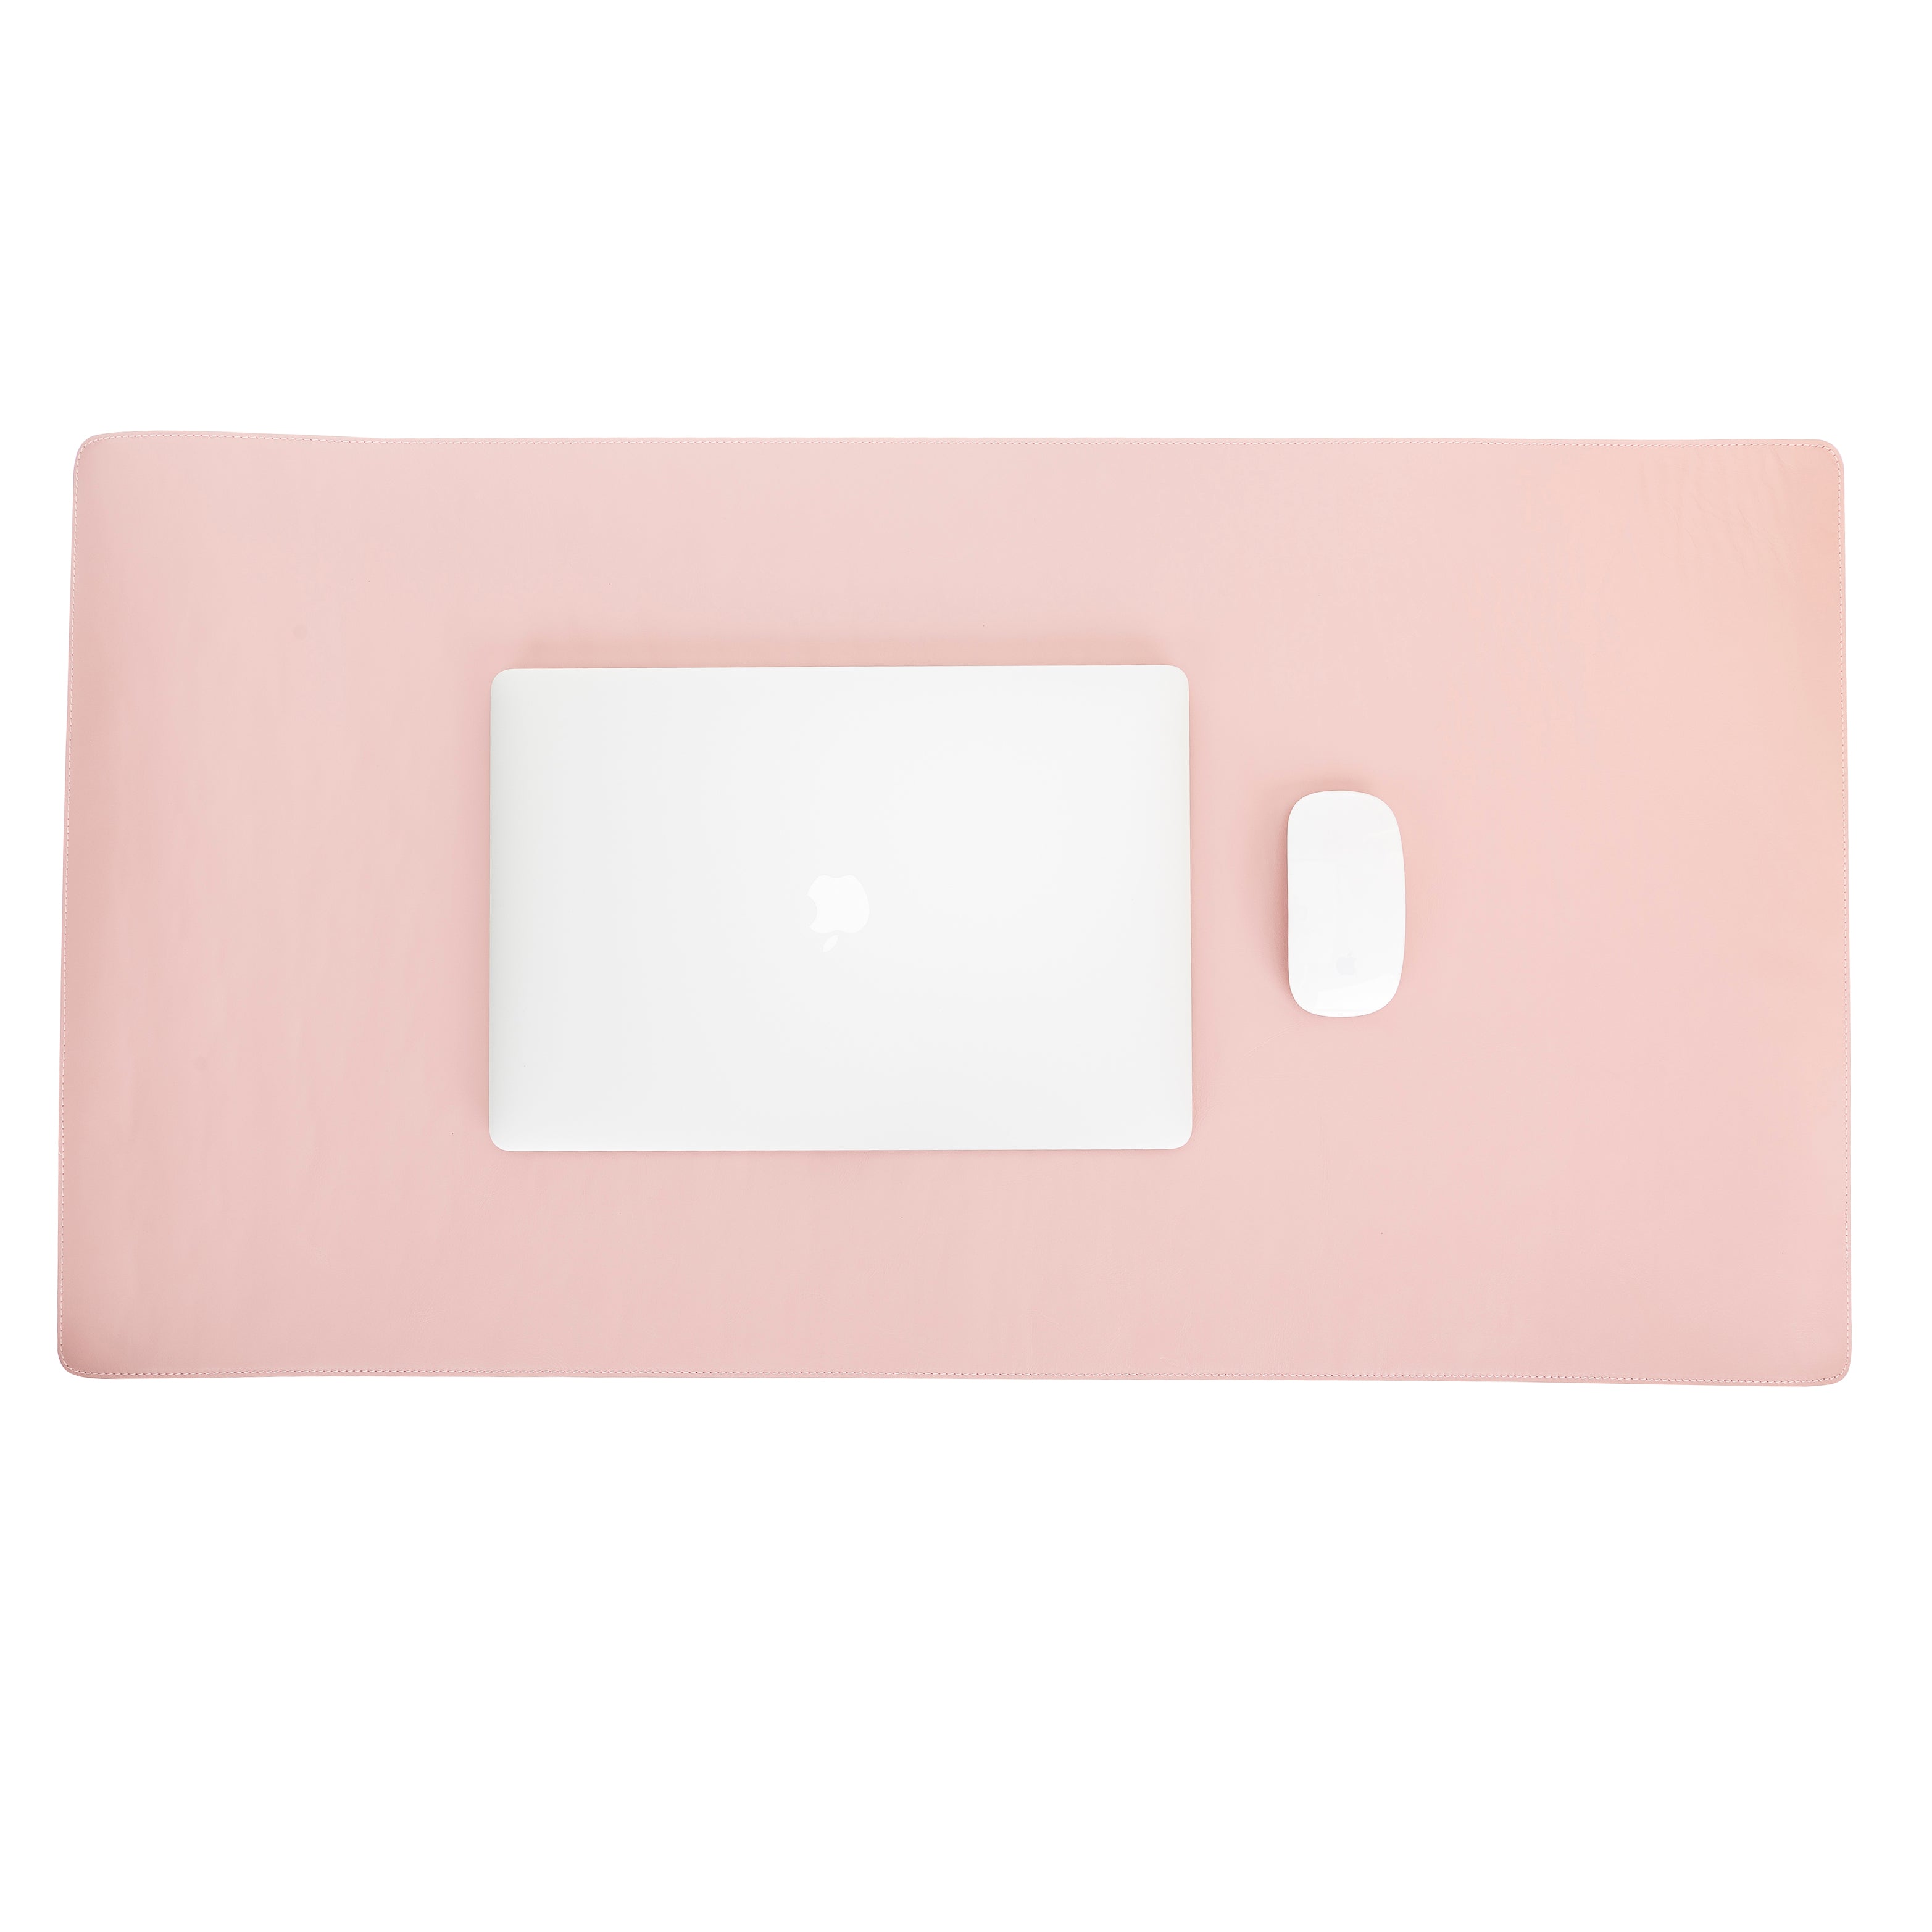 DelfiCase Genuine Leather Deskmat, Computer Pad, Office Desk Pad (Pink Nude) 6